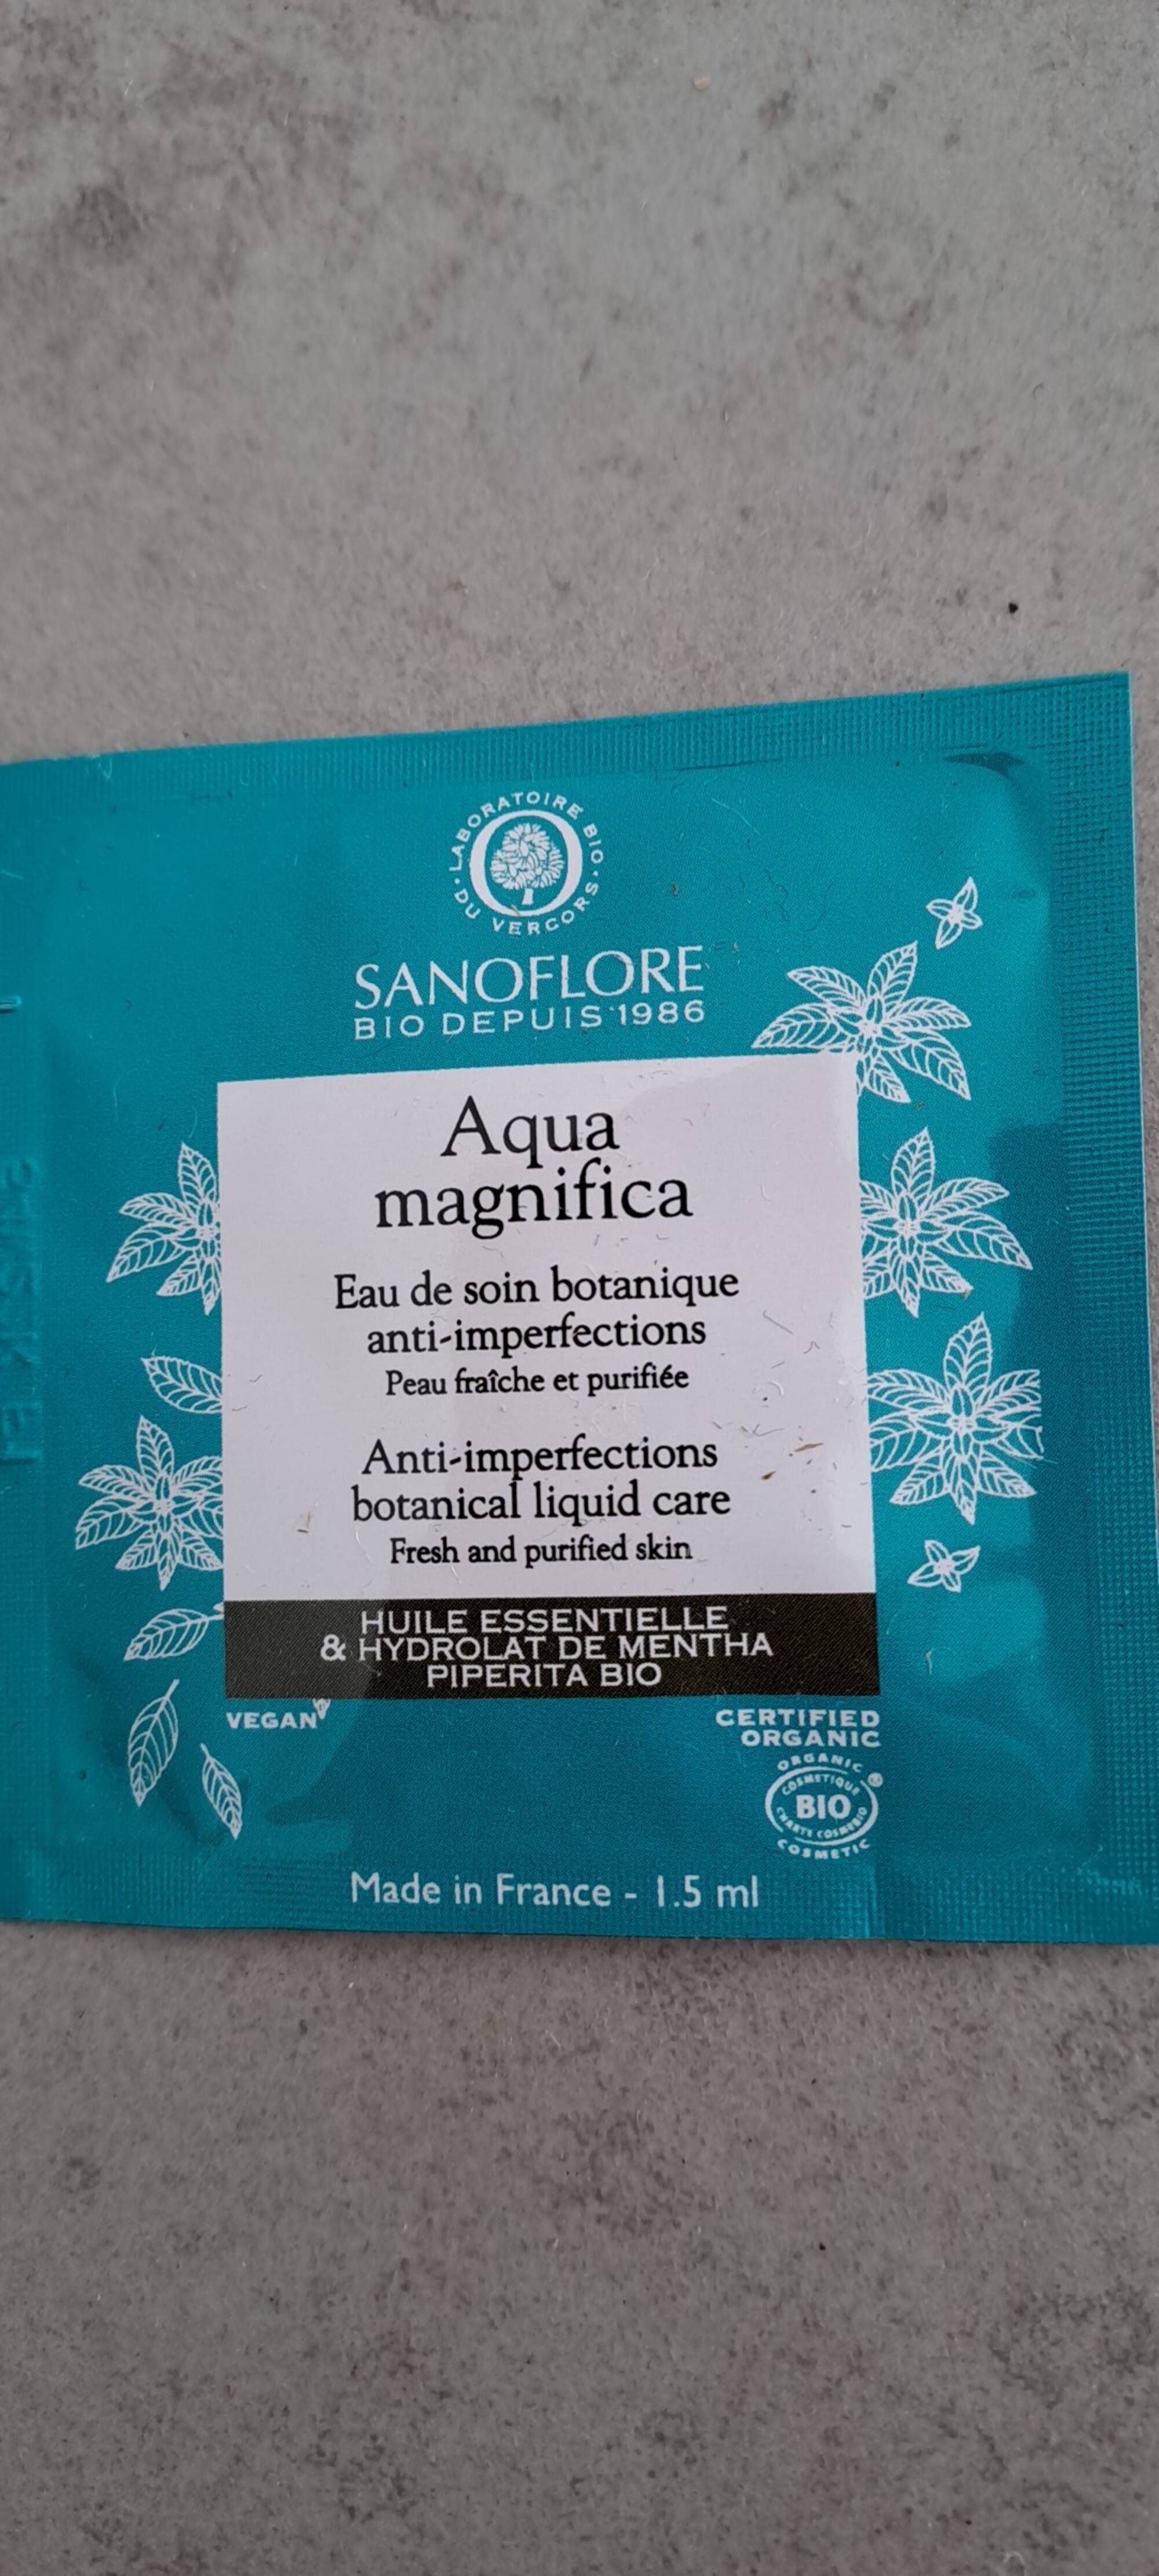 SANOFLORE - Aqua magnifica - Eau de soin botanique anti-imperfections